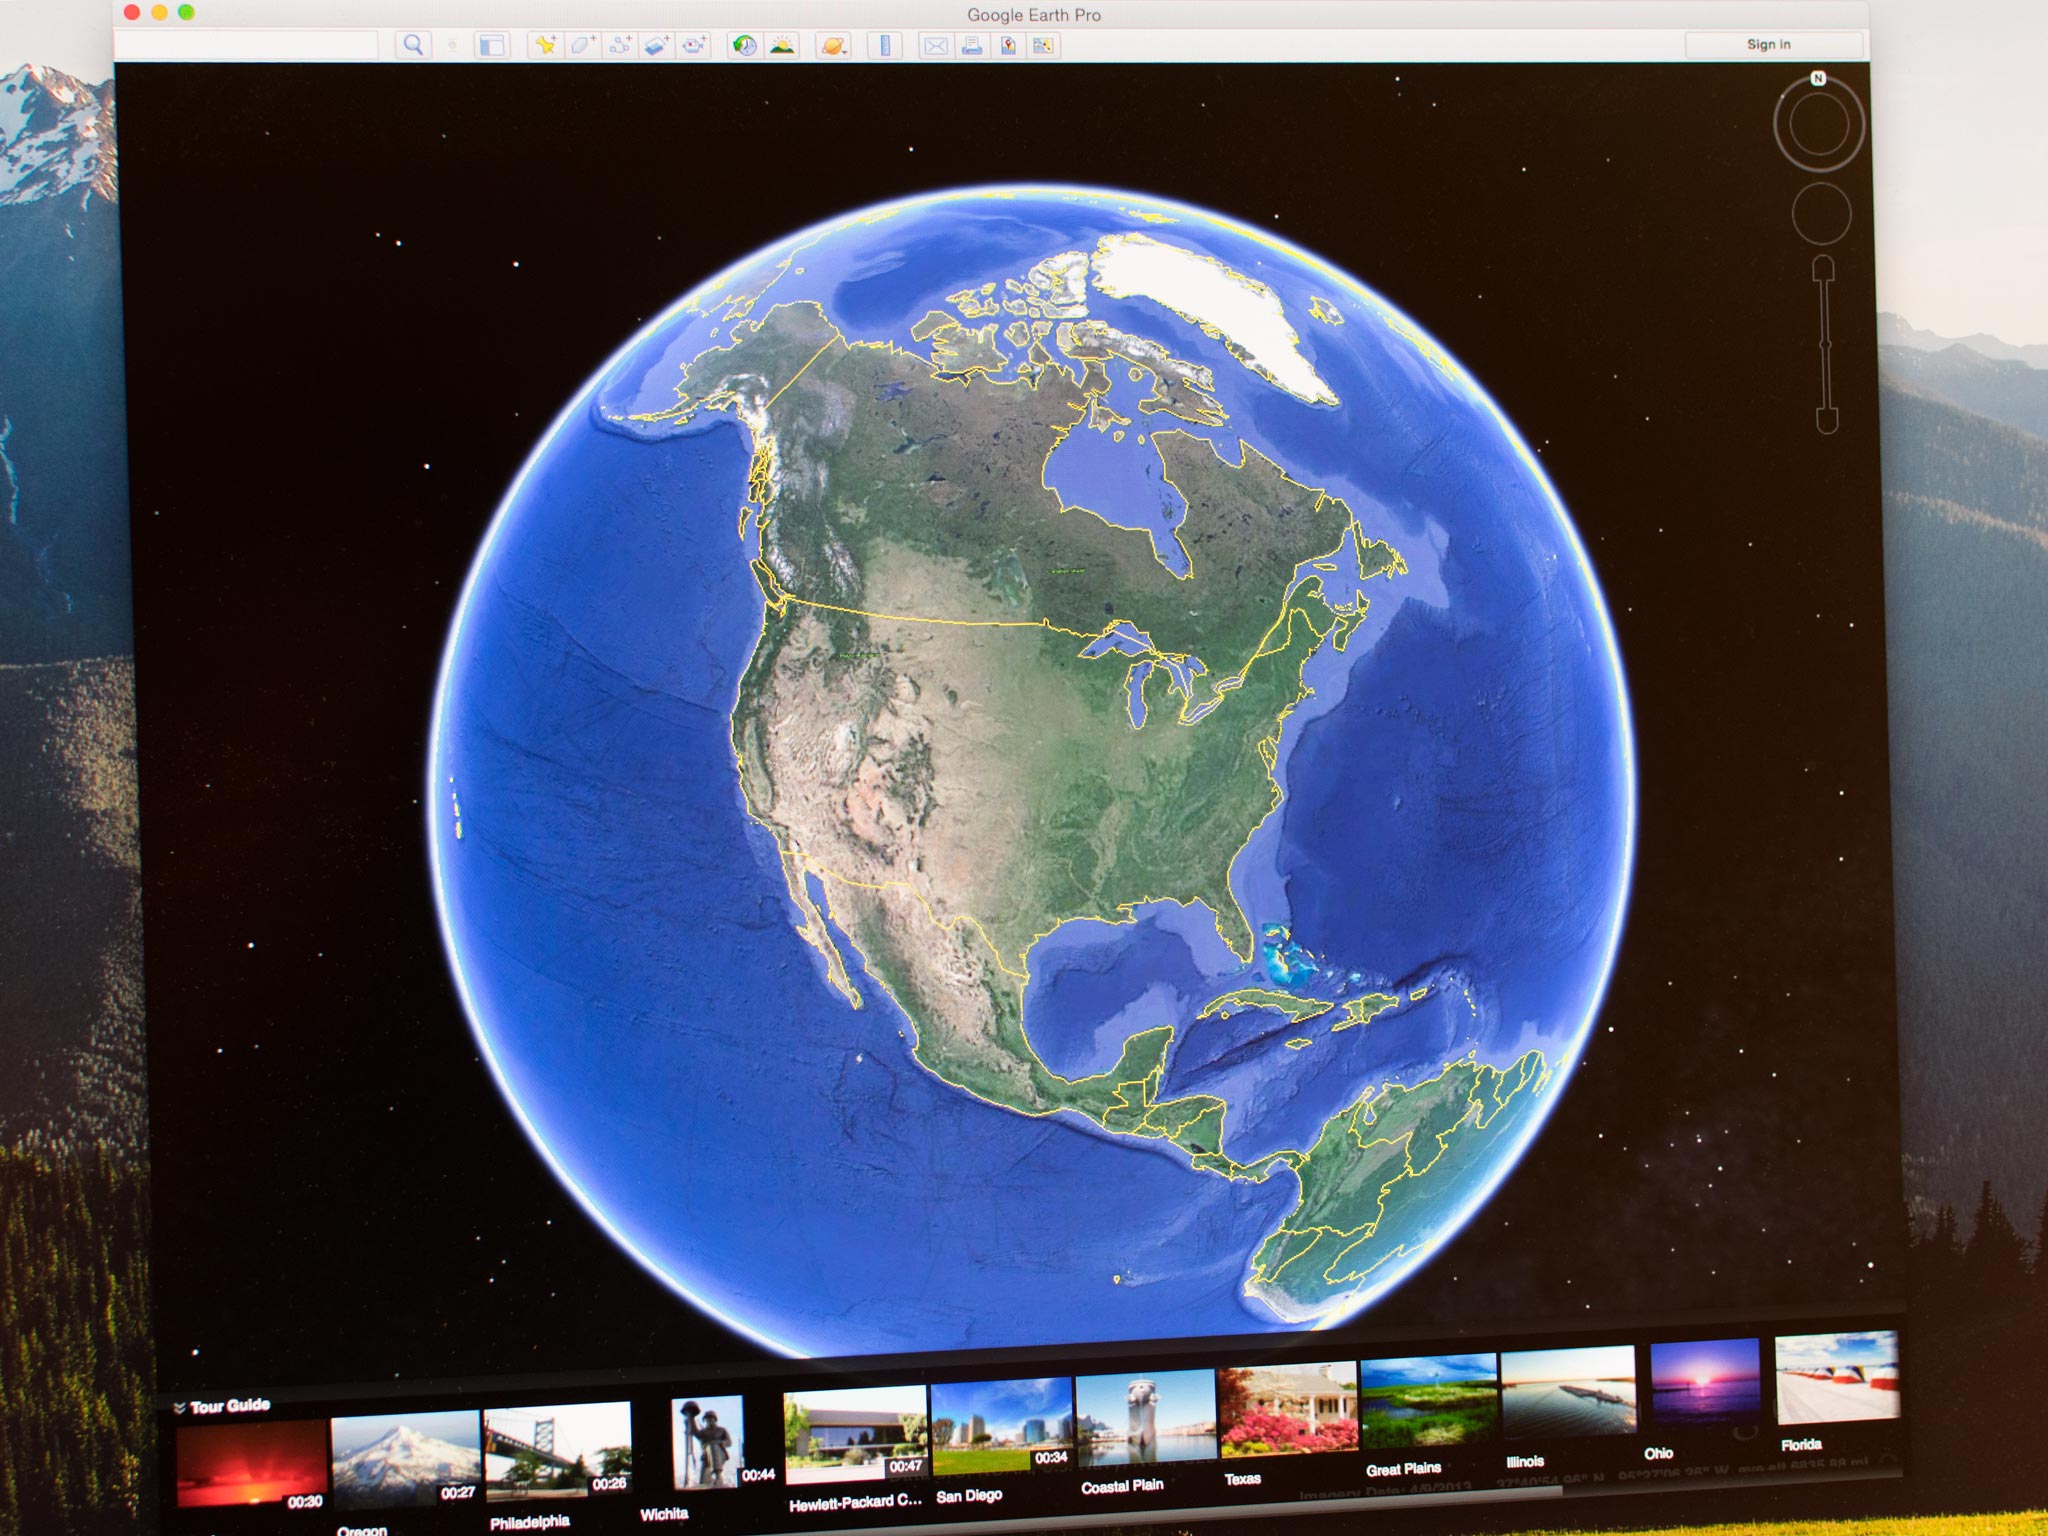 google earth pro download